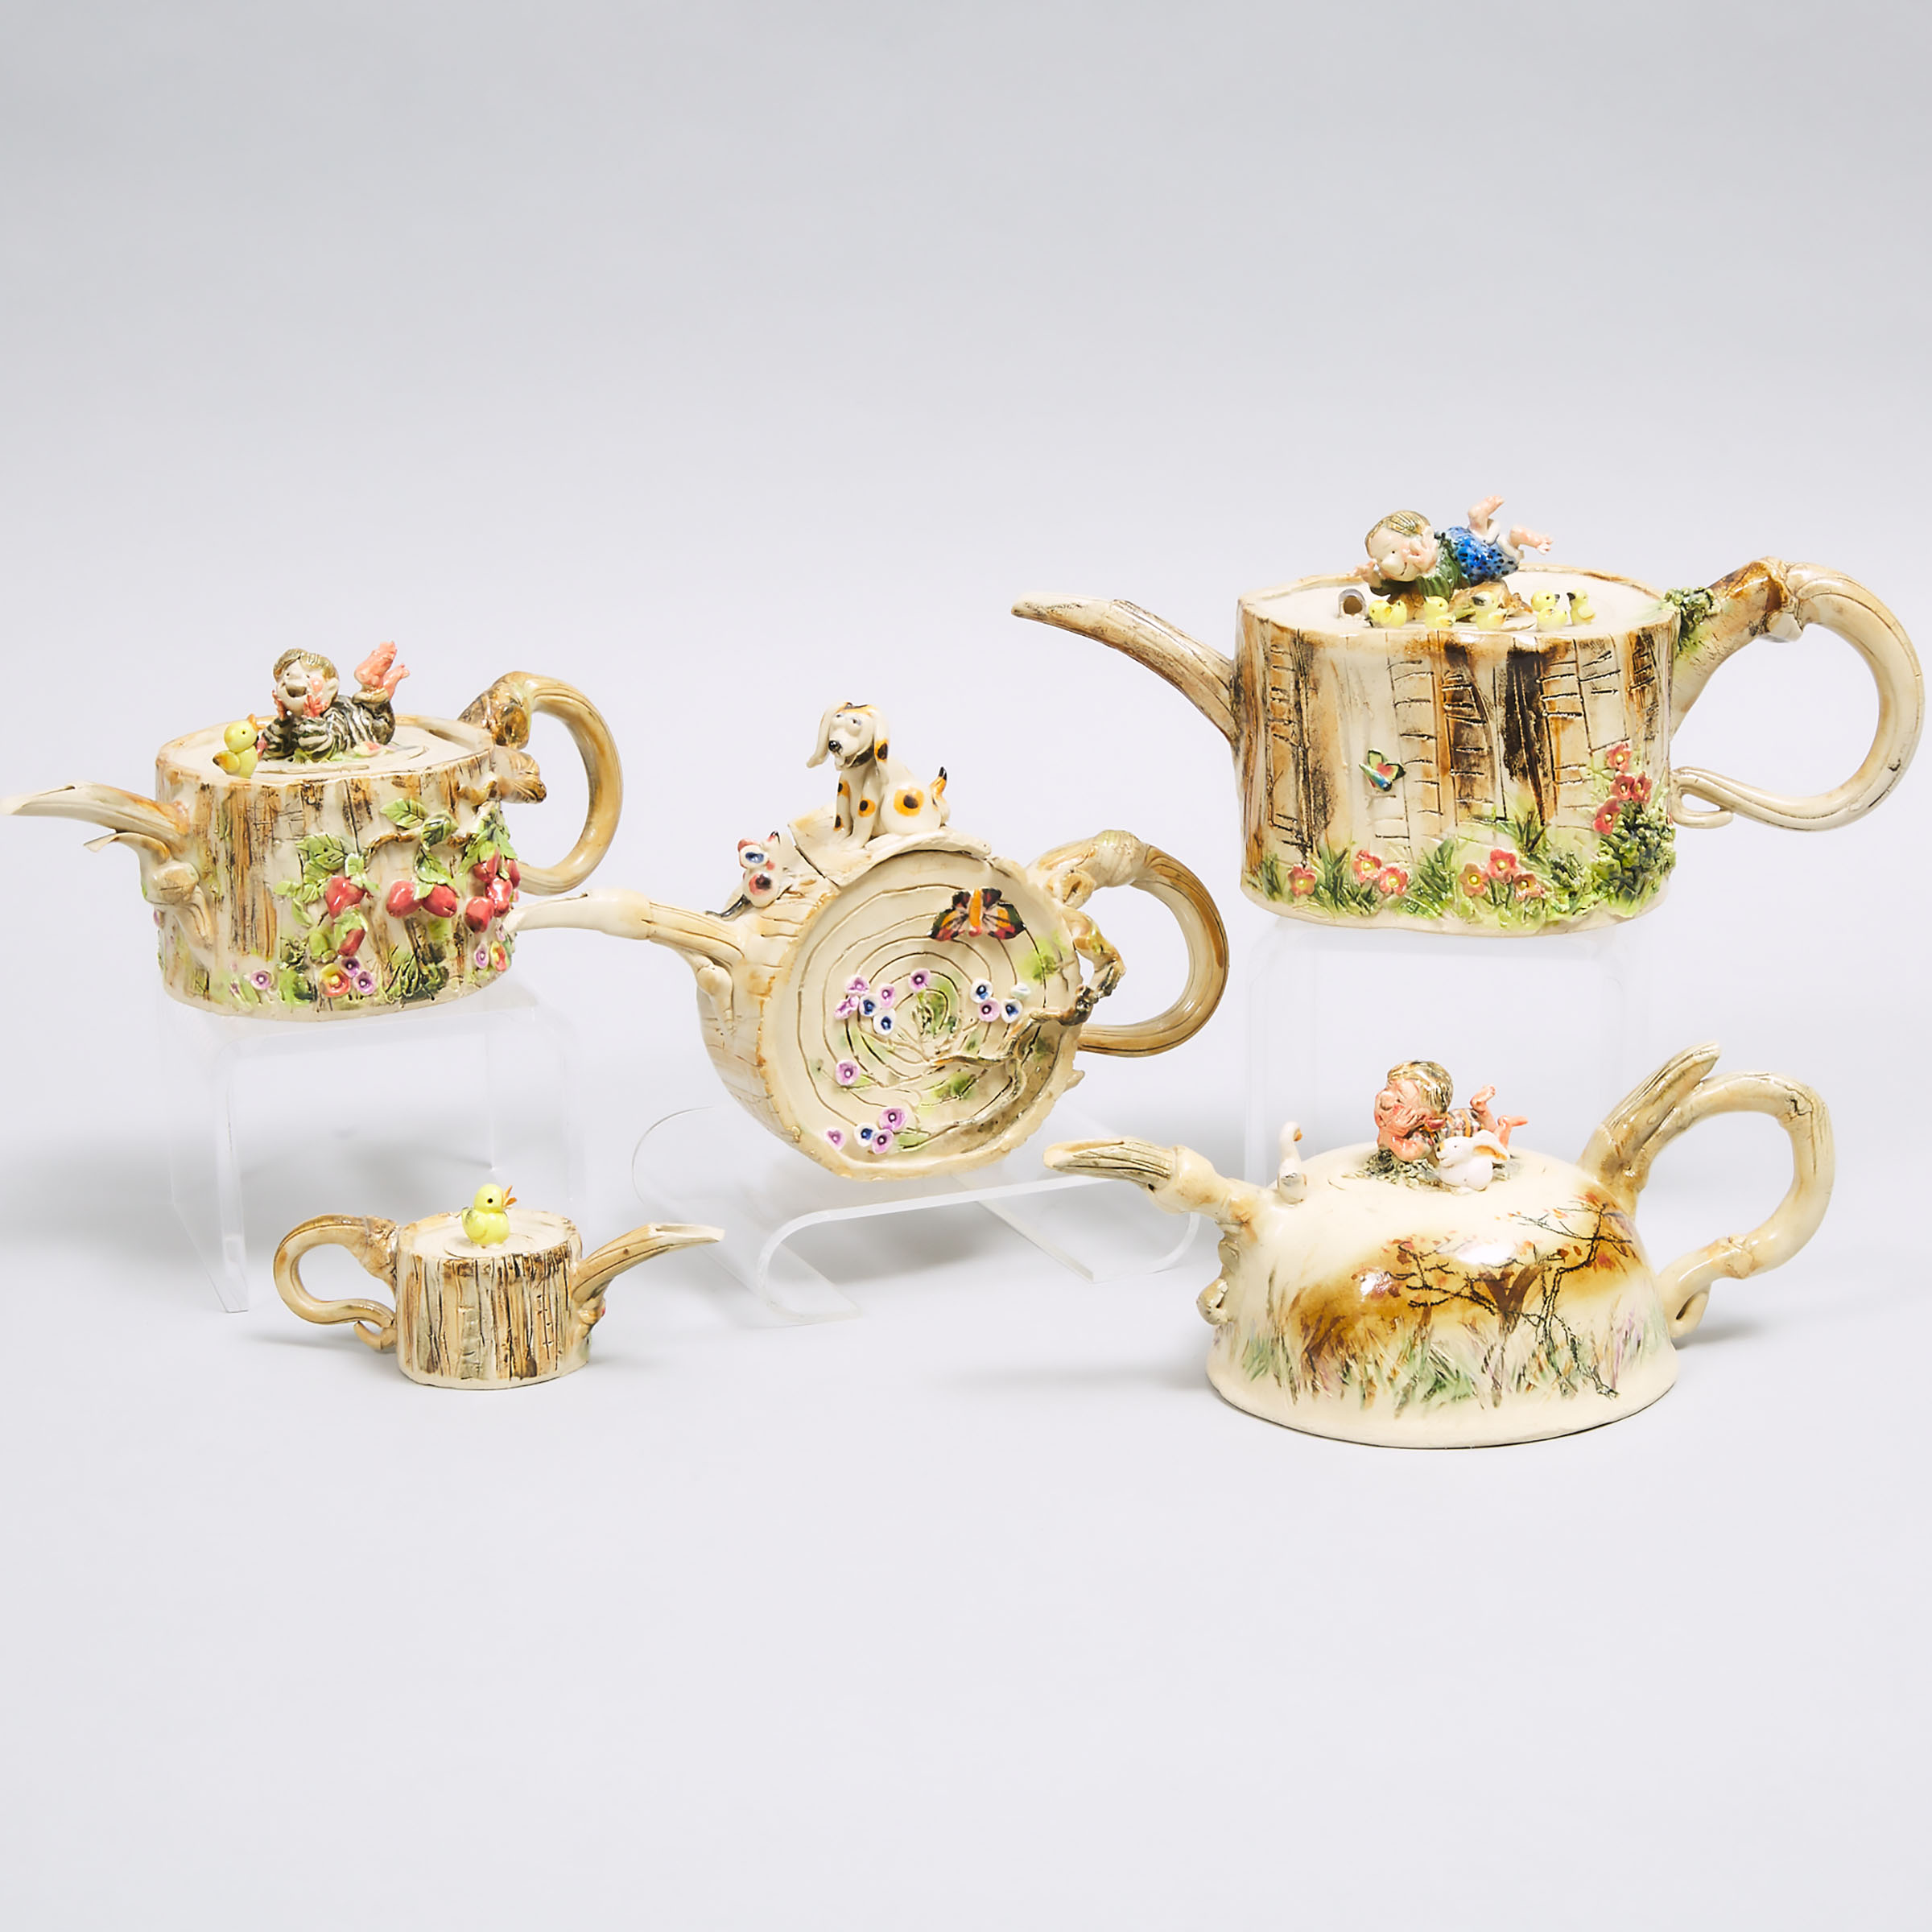 Patrick Mok (Canadian, b. 1940), Five Small Sculpted Stoneware Teapots, 1999-2005